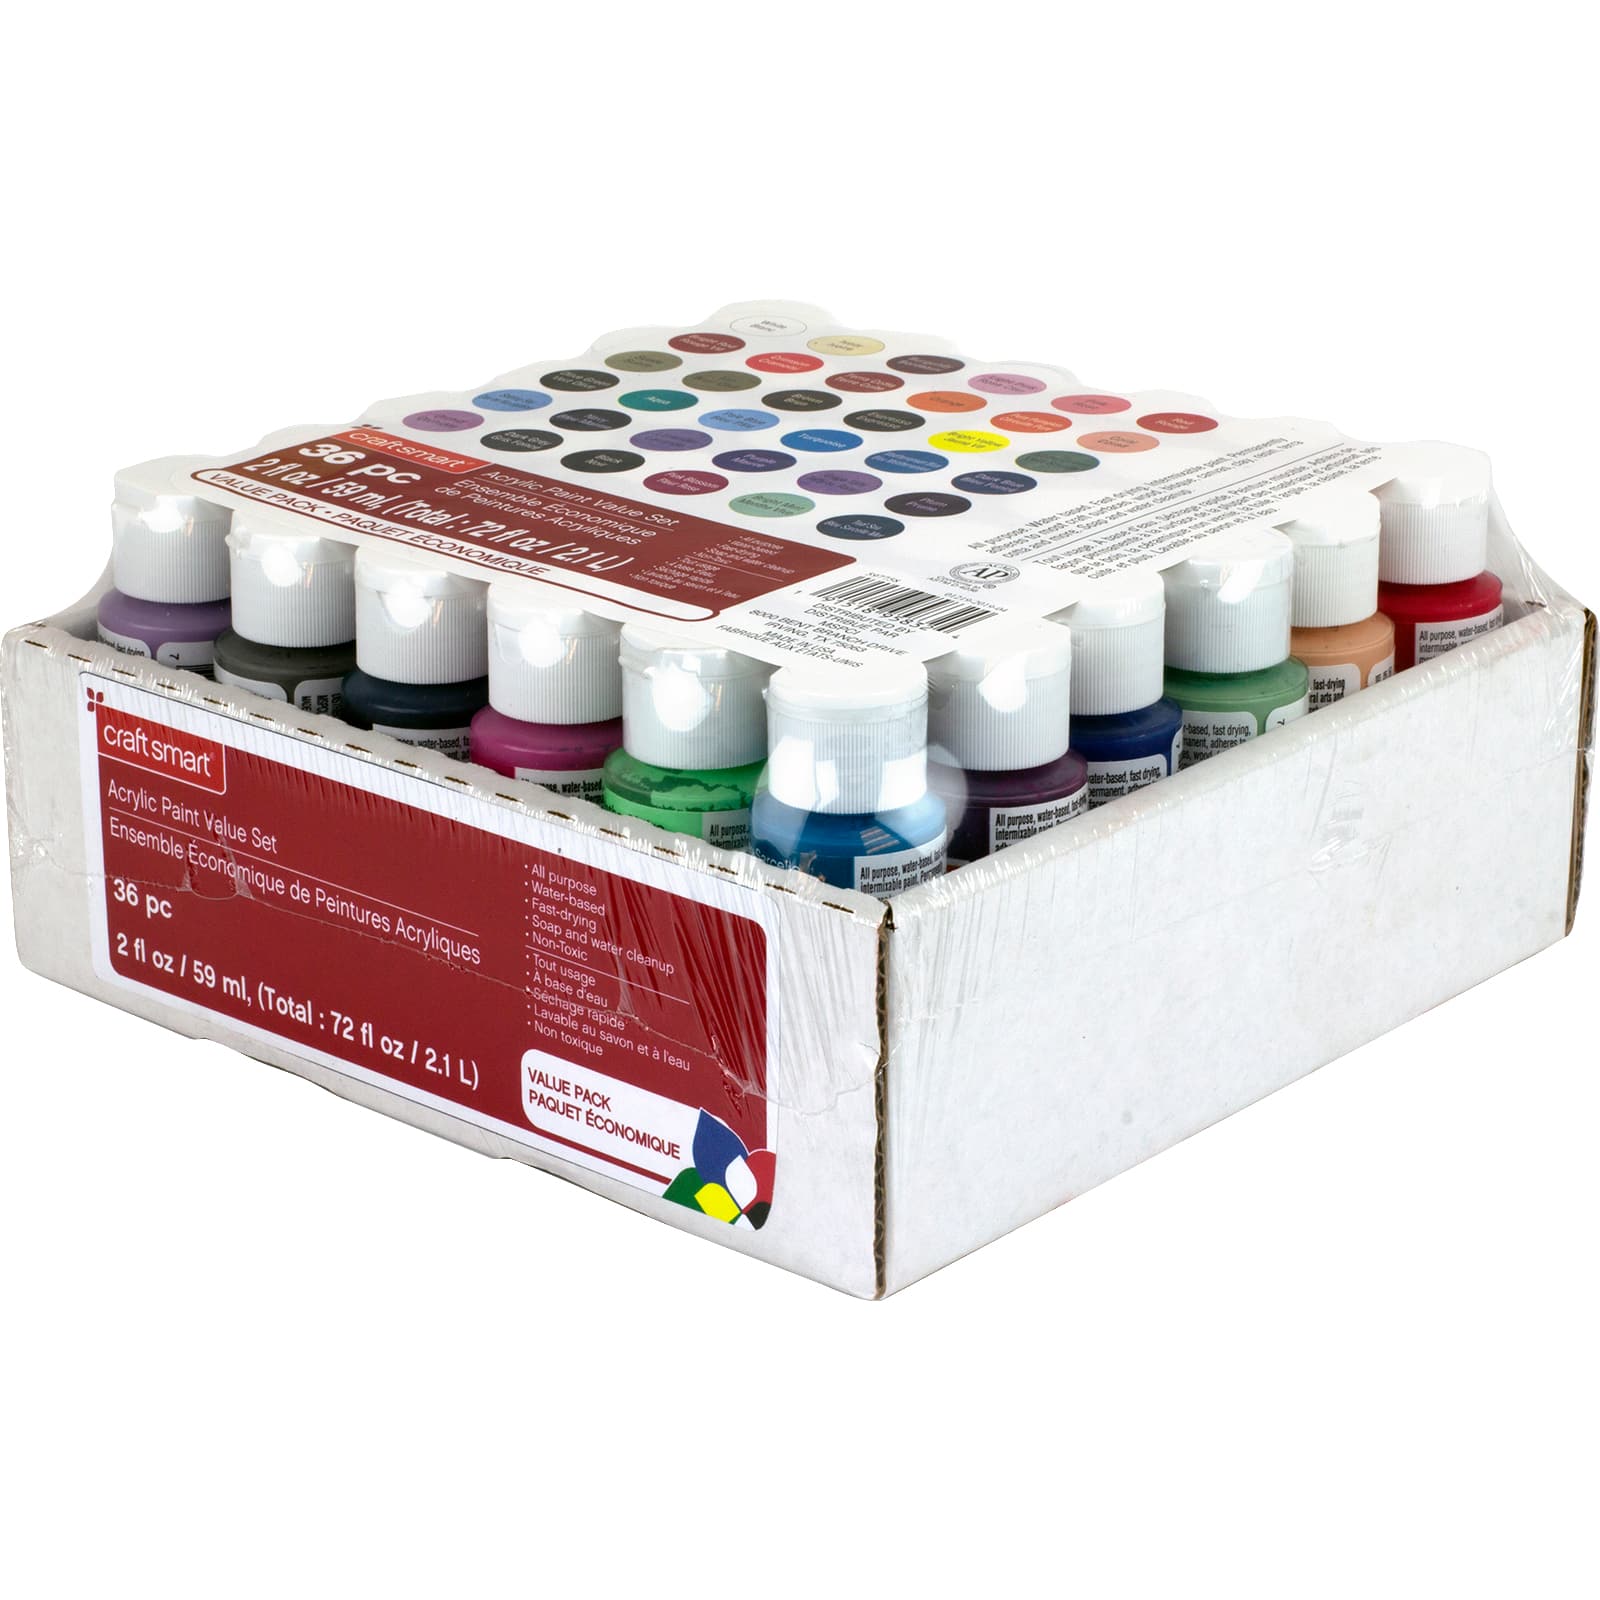 Complete Acrylic Paint Set, 36 Piece Professional Painting Set